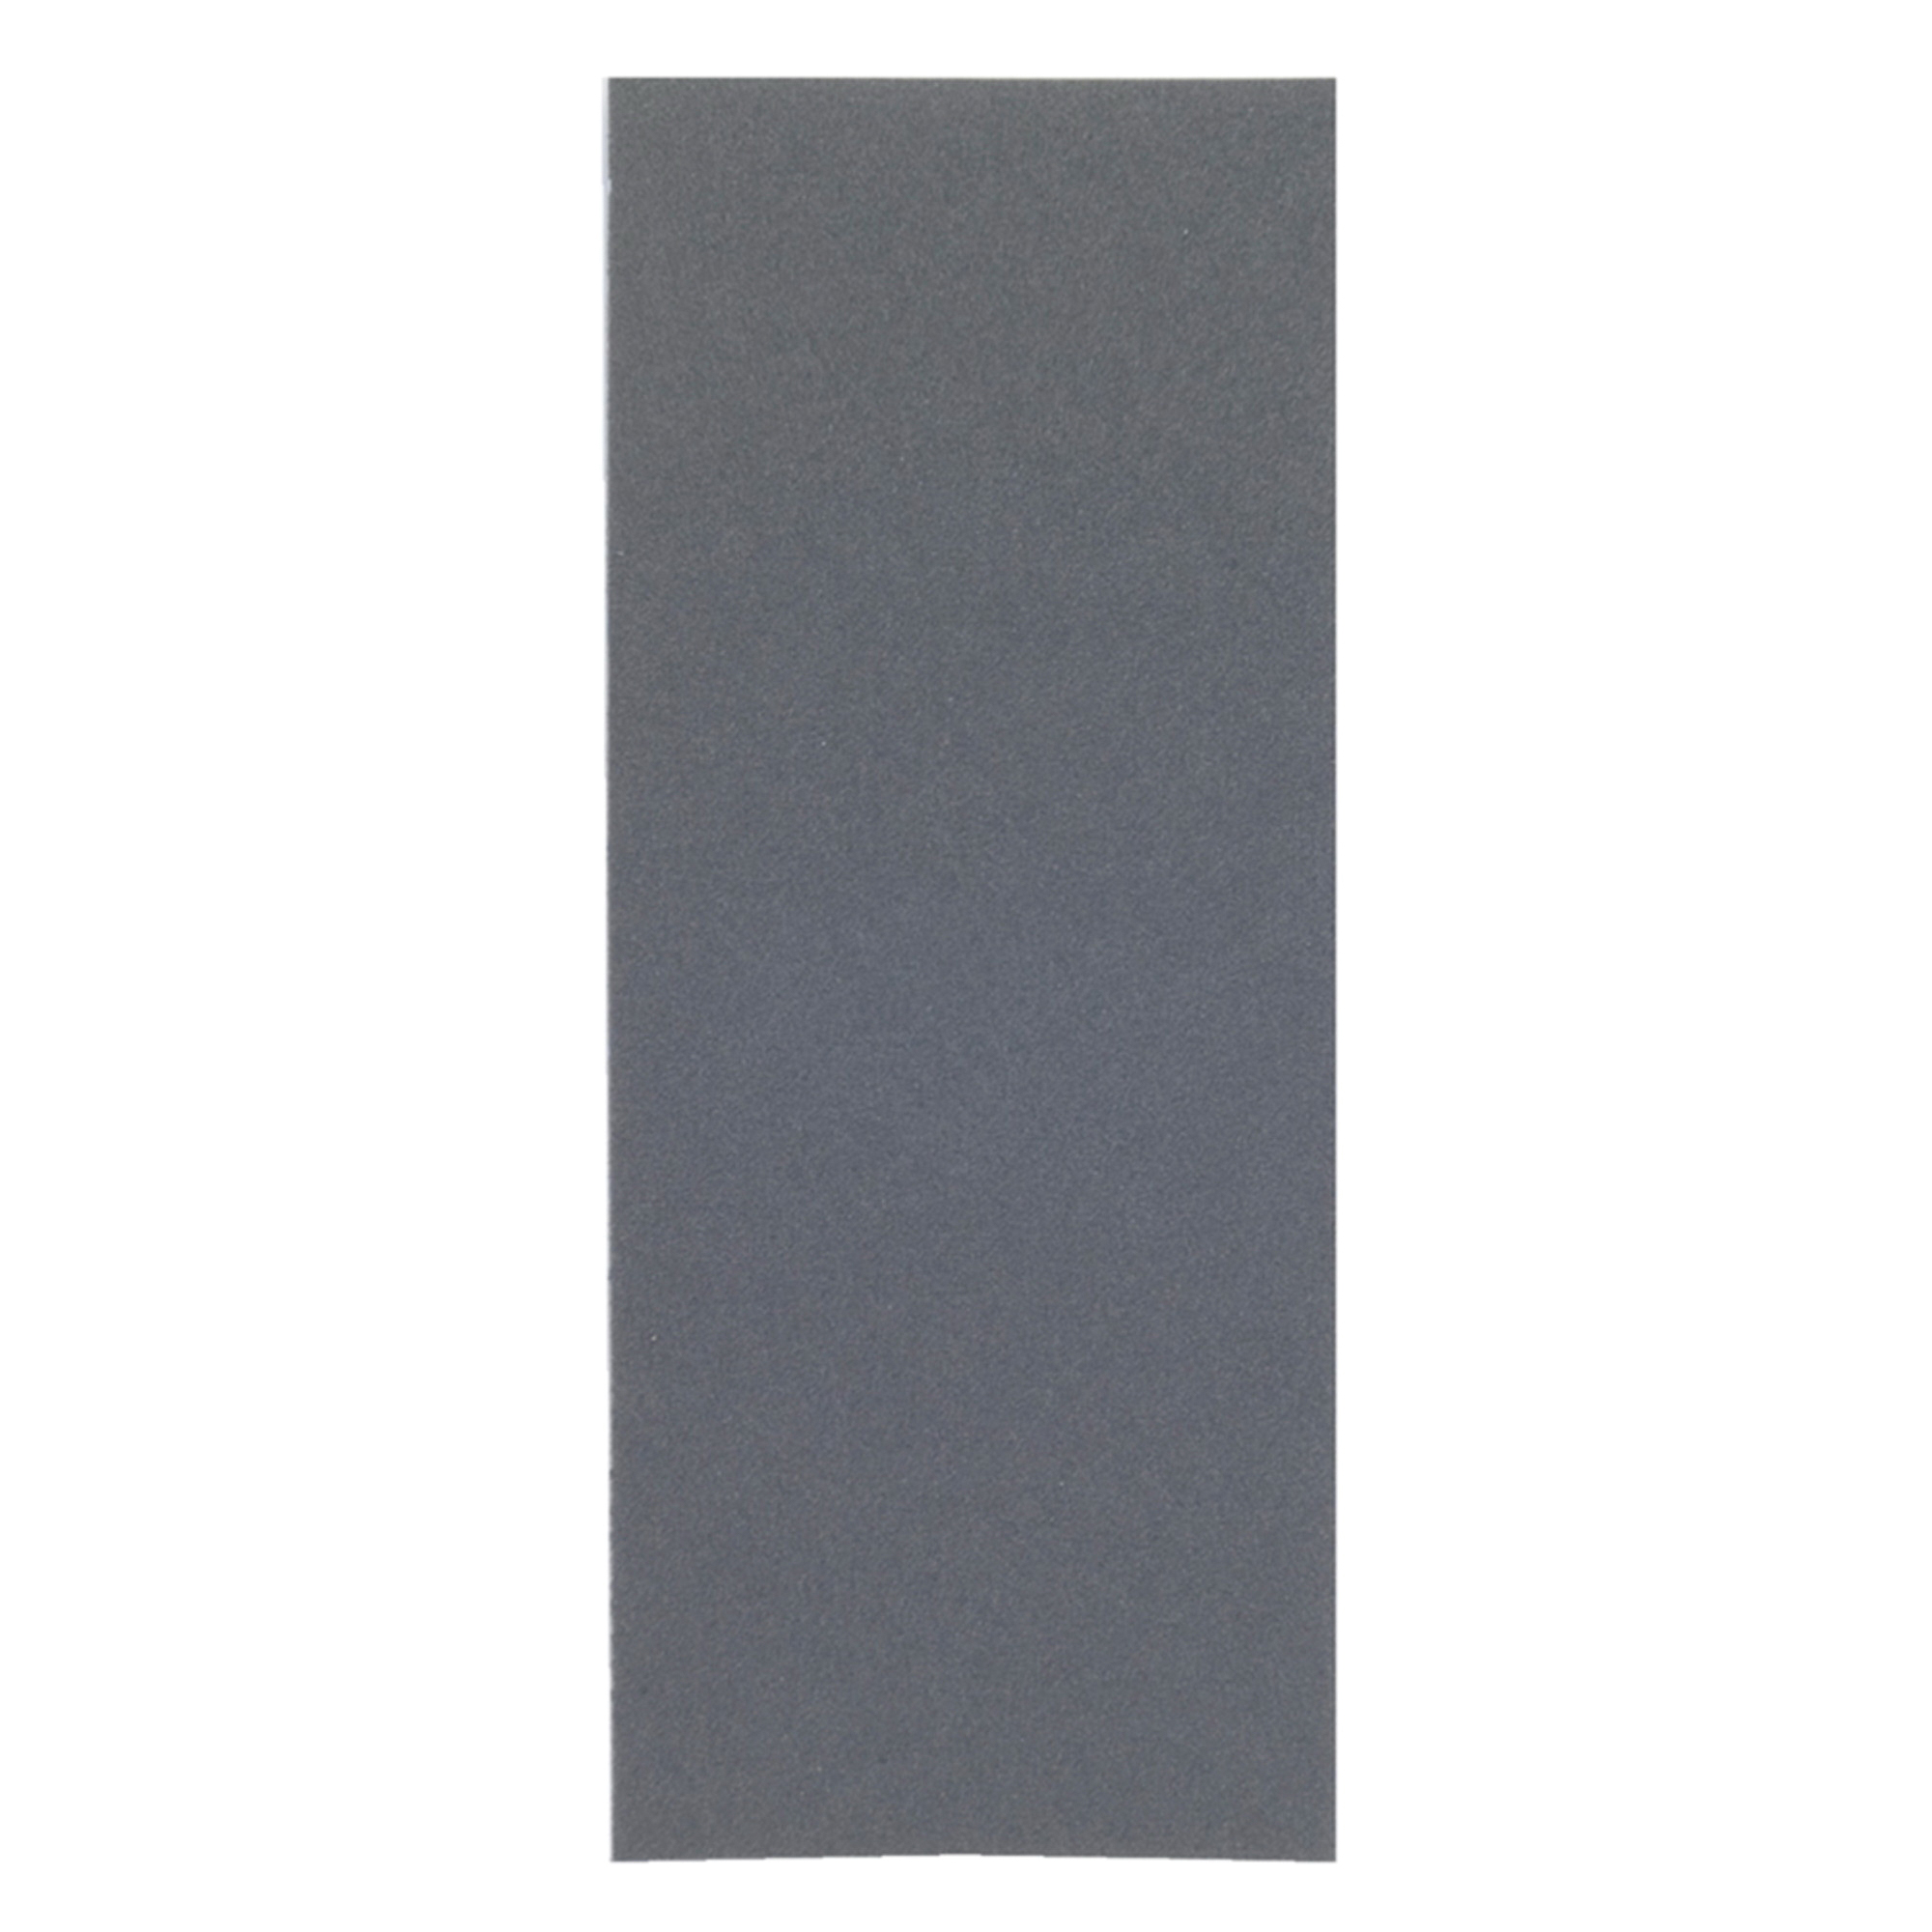 Norton® Blue-Bak™ 66261139357 T414 Coated Sandpaper Sheet, 9 in L x 3-2/3 in W, 280 Grit, Extra Fine Grade, Silicon Carbide Abrasive, Paper Backing